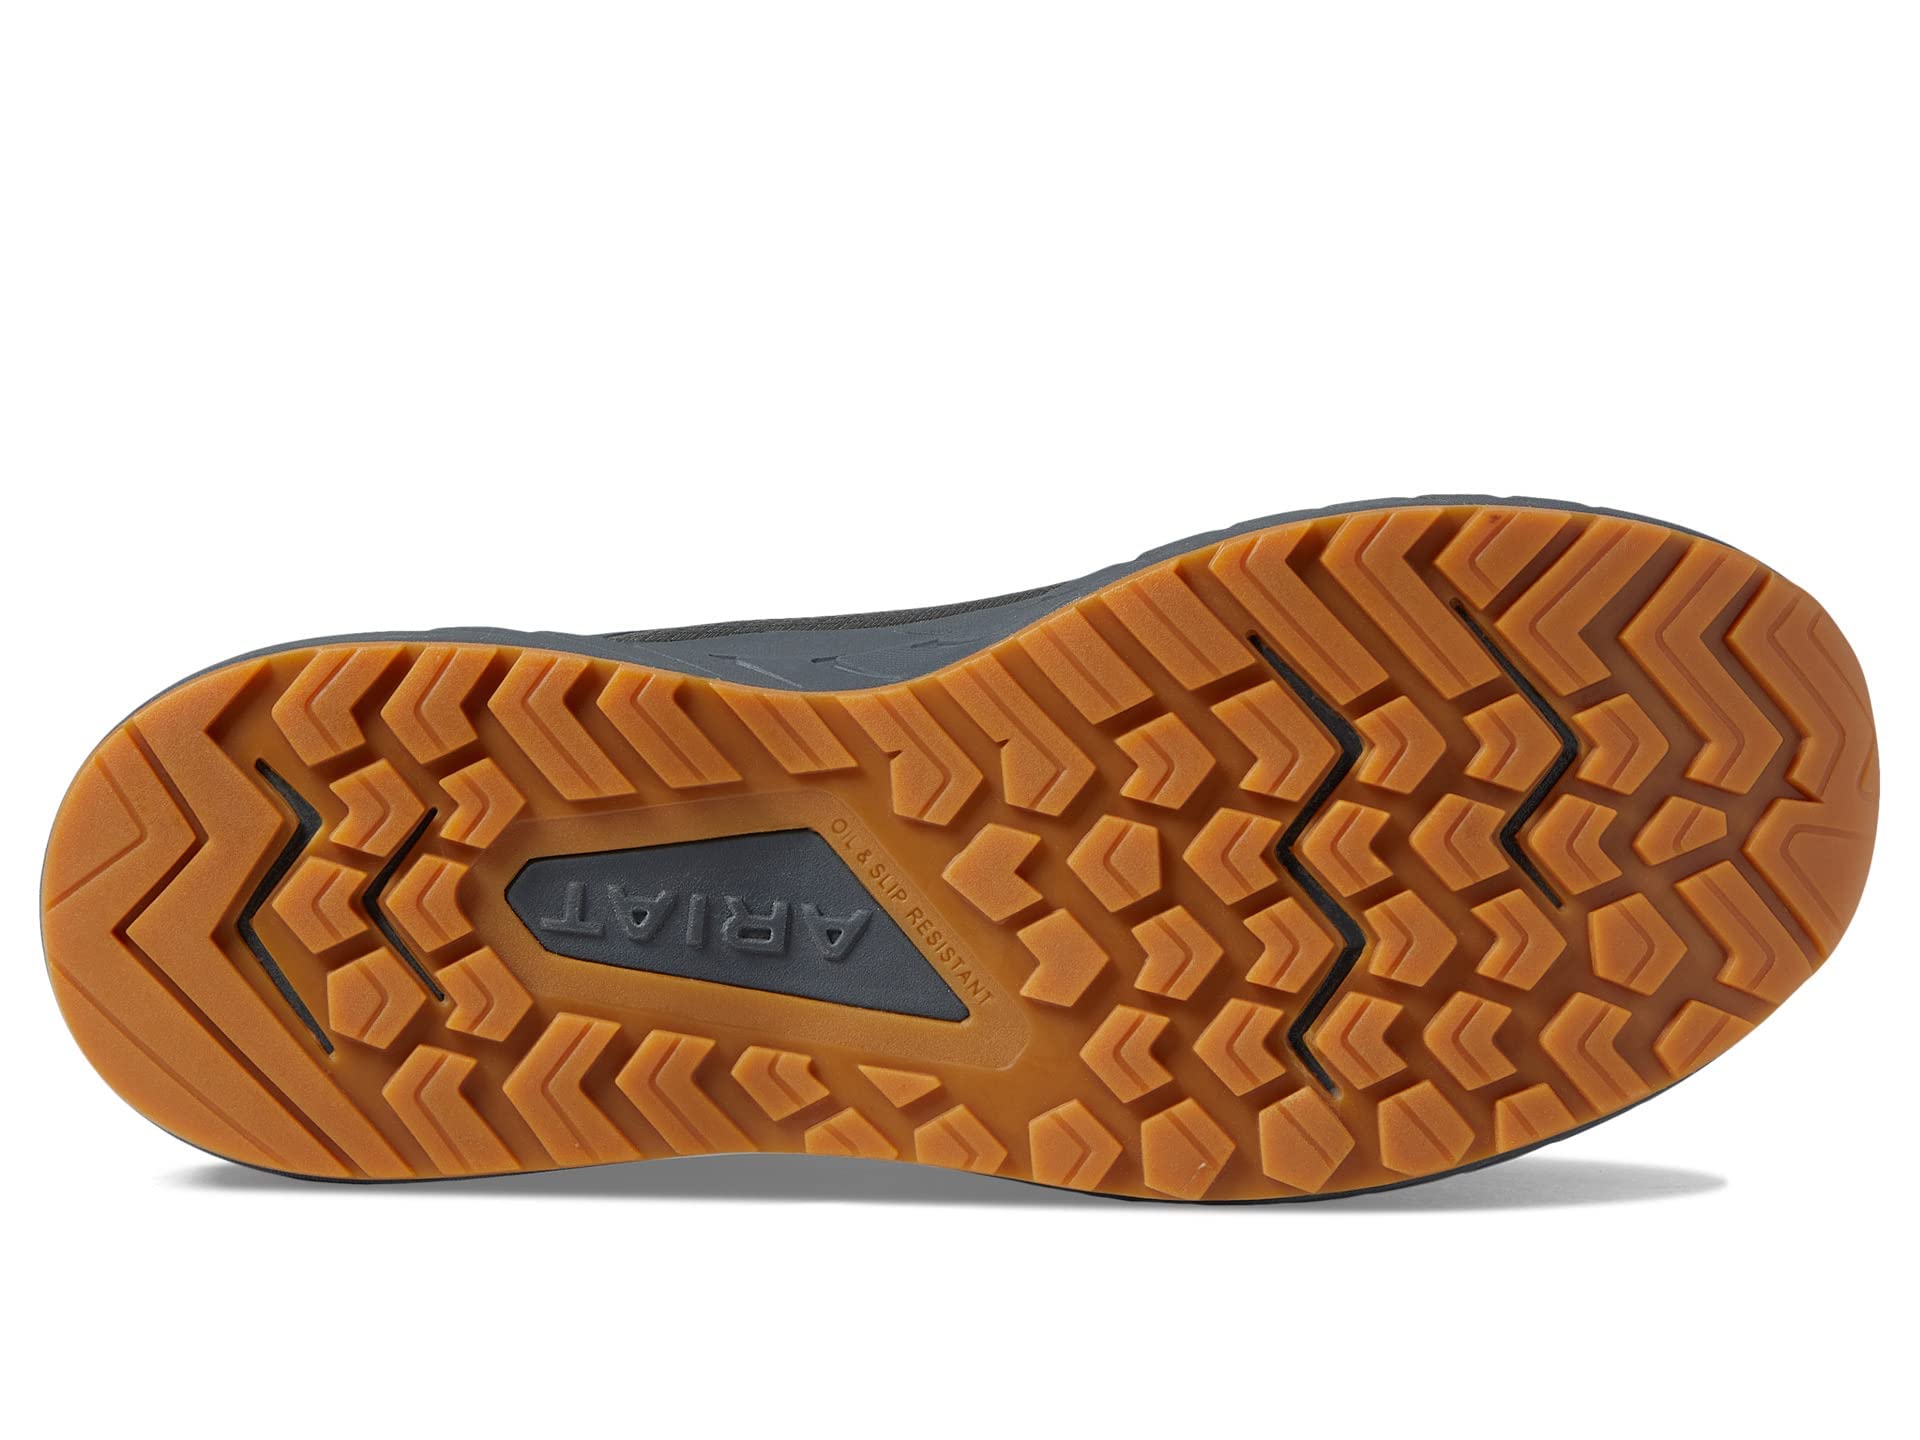 ARIAT Men's Outpace Composite Toe Safety Shoe Fire